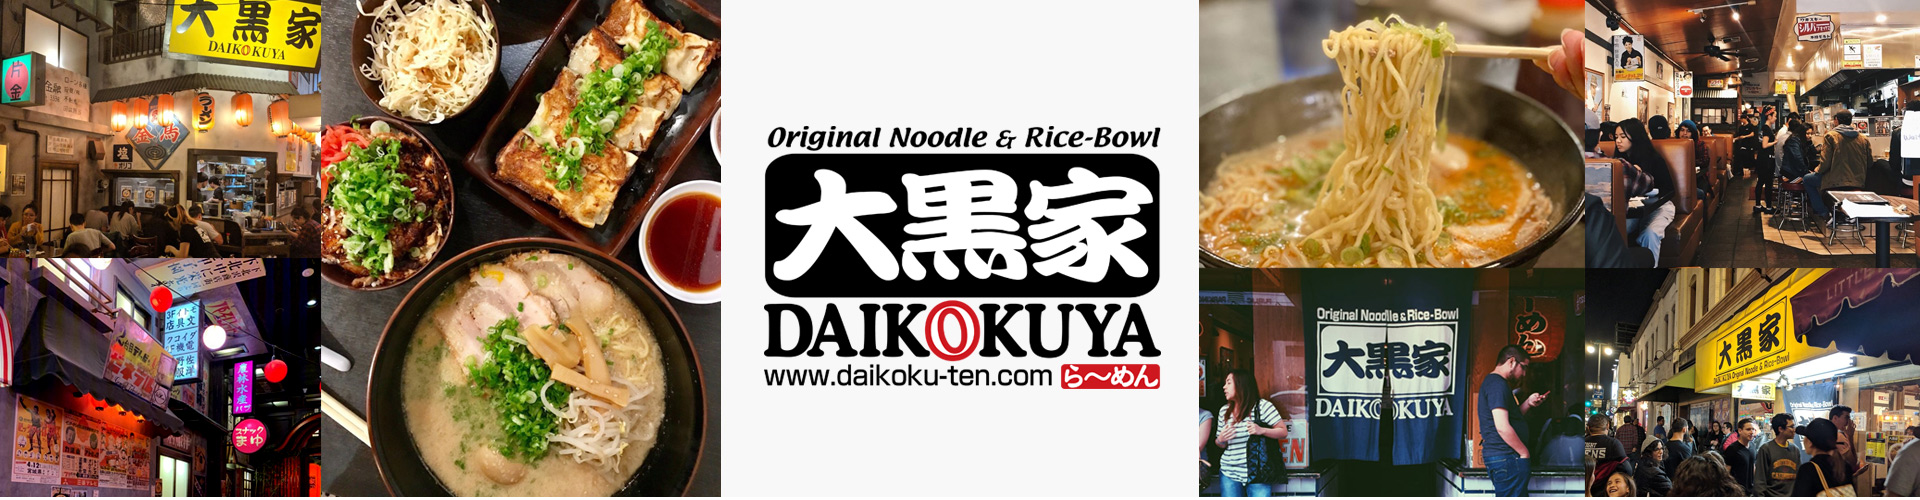 Original Noodle & Rice-Bowl 大黒家らーめん